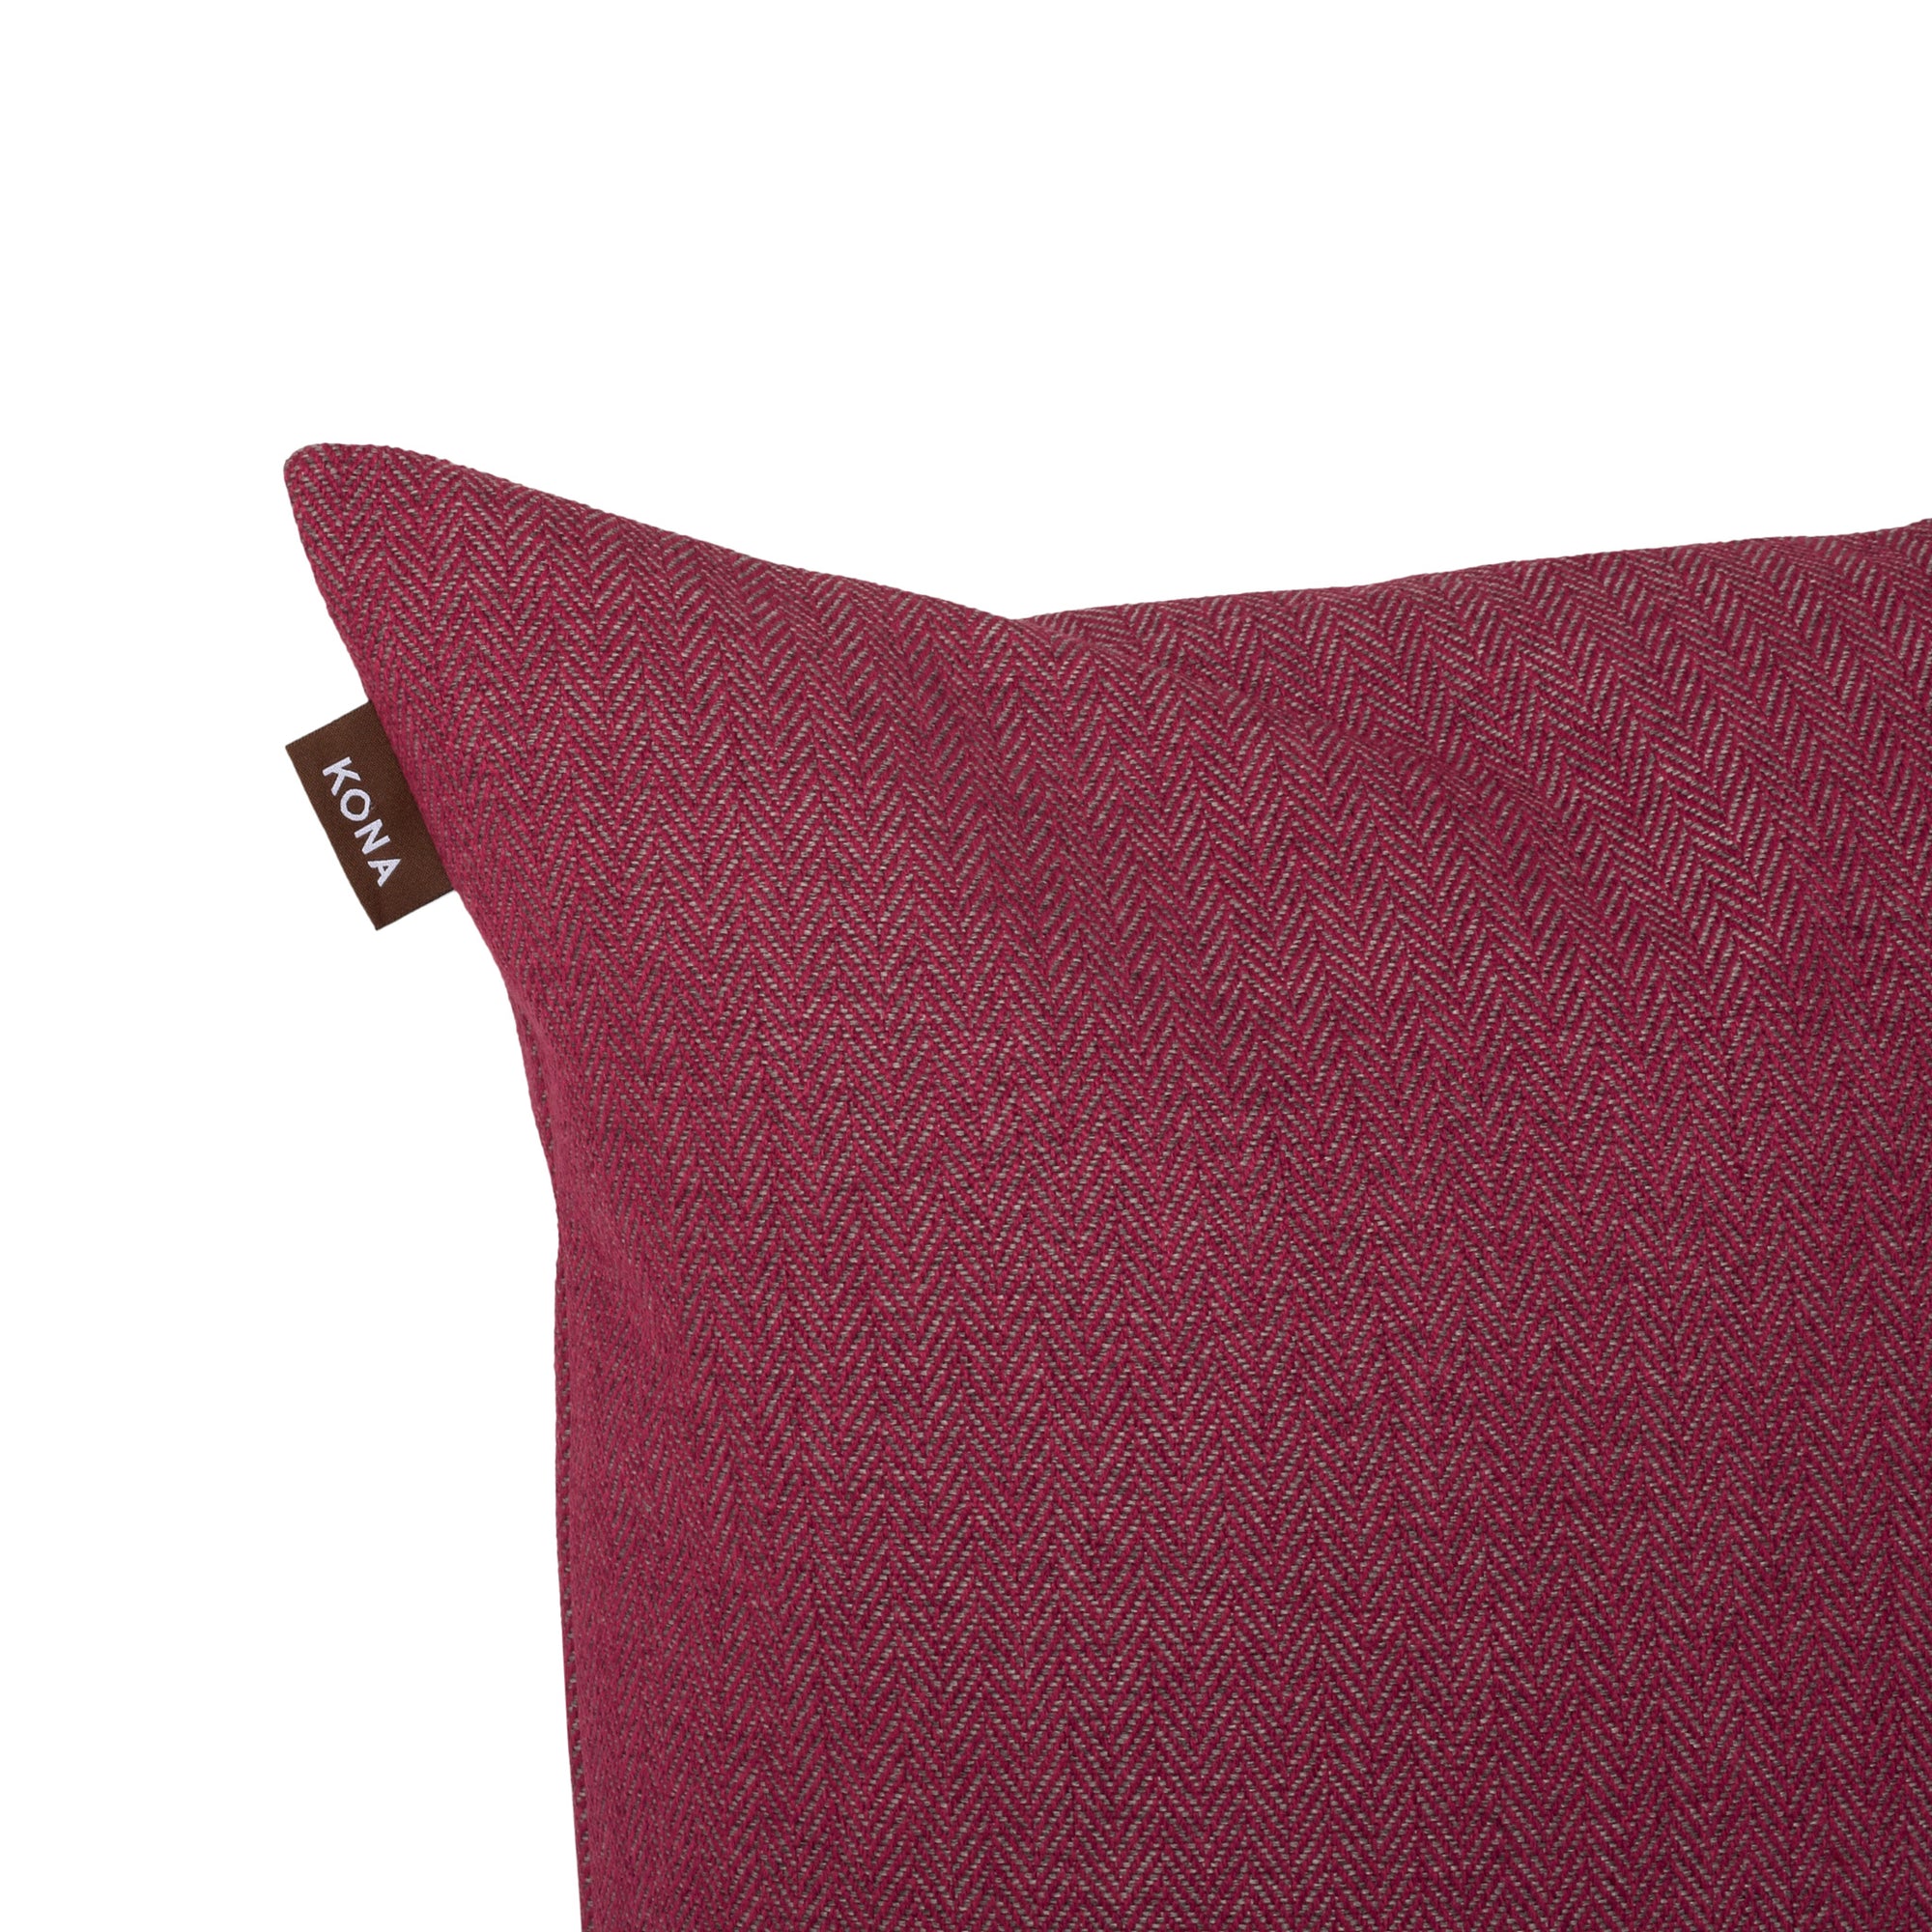 KONA CAVE ® Pink Magenta Herringbone dog and home designer decor sets. Blankets pillows and doggy bone. 